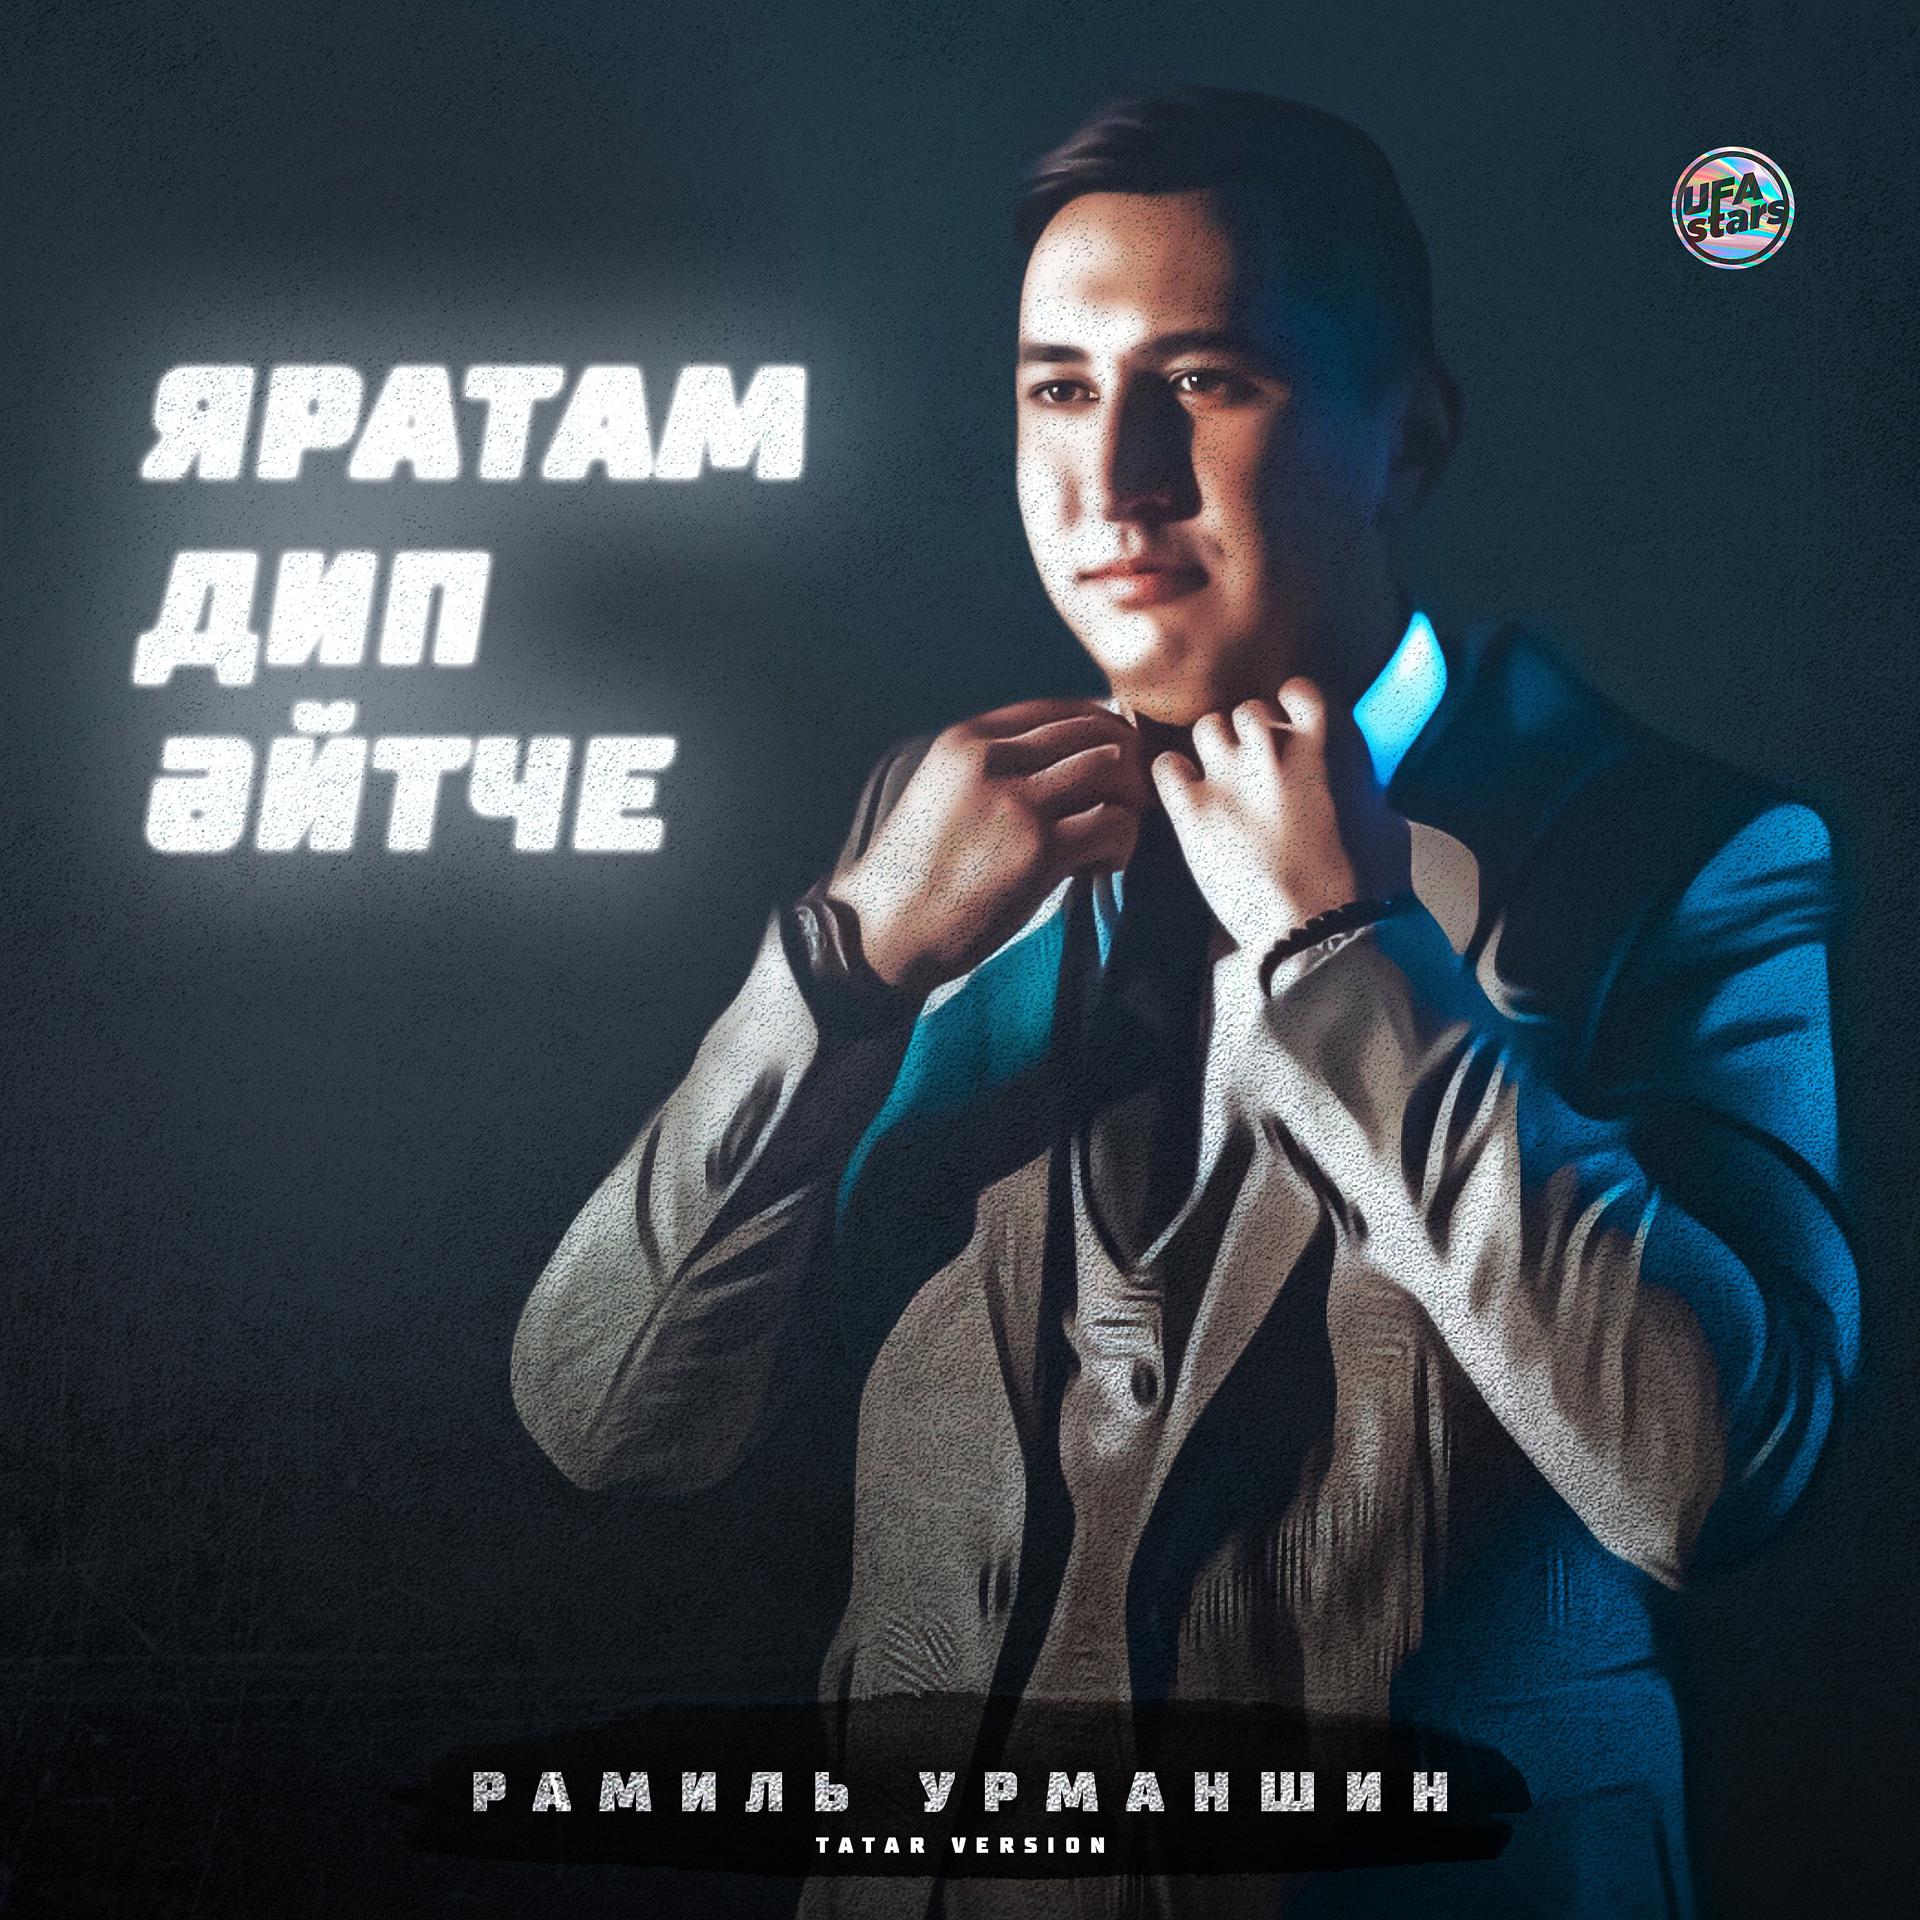 Постер альбома Яратам дип әйтче (Tatar Version)